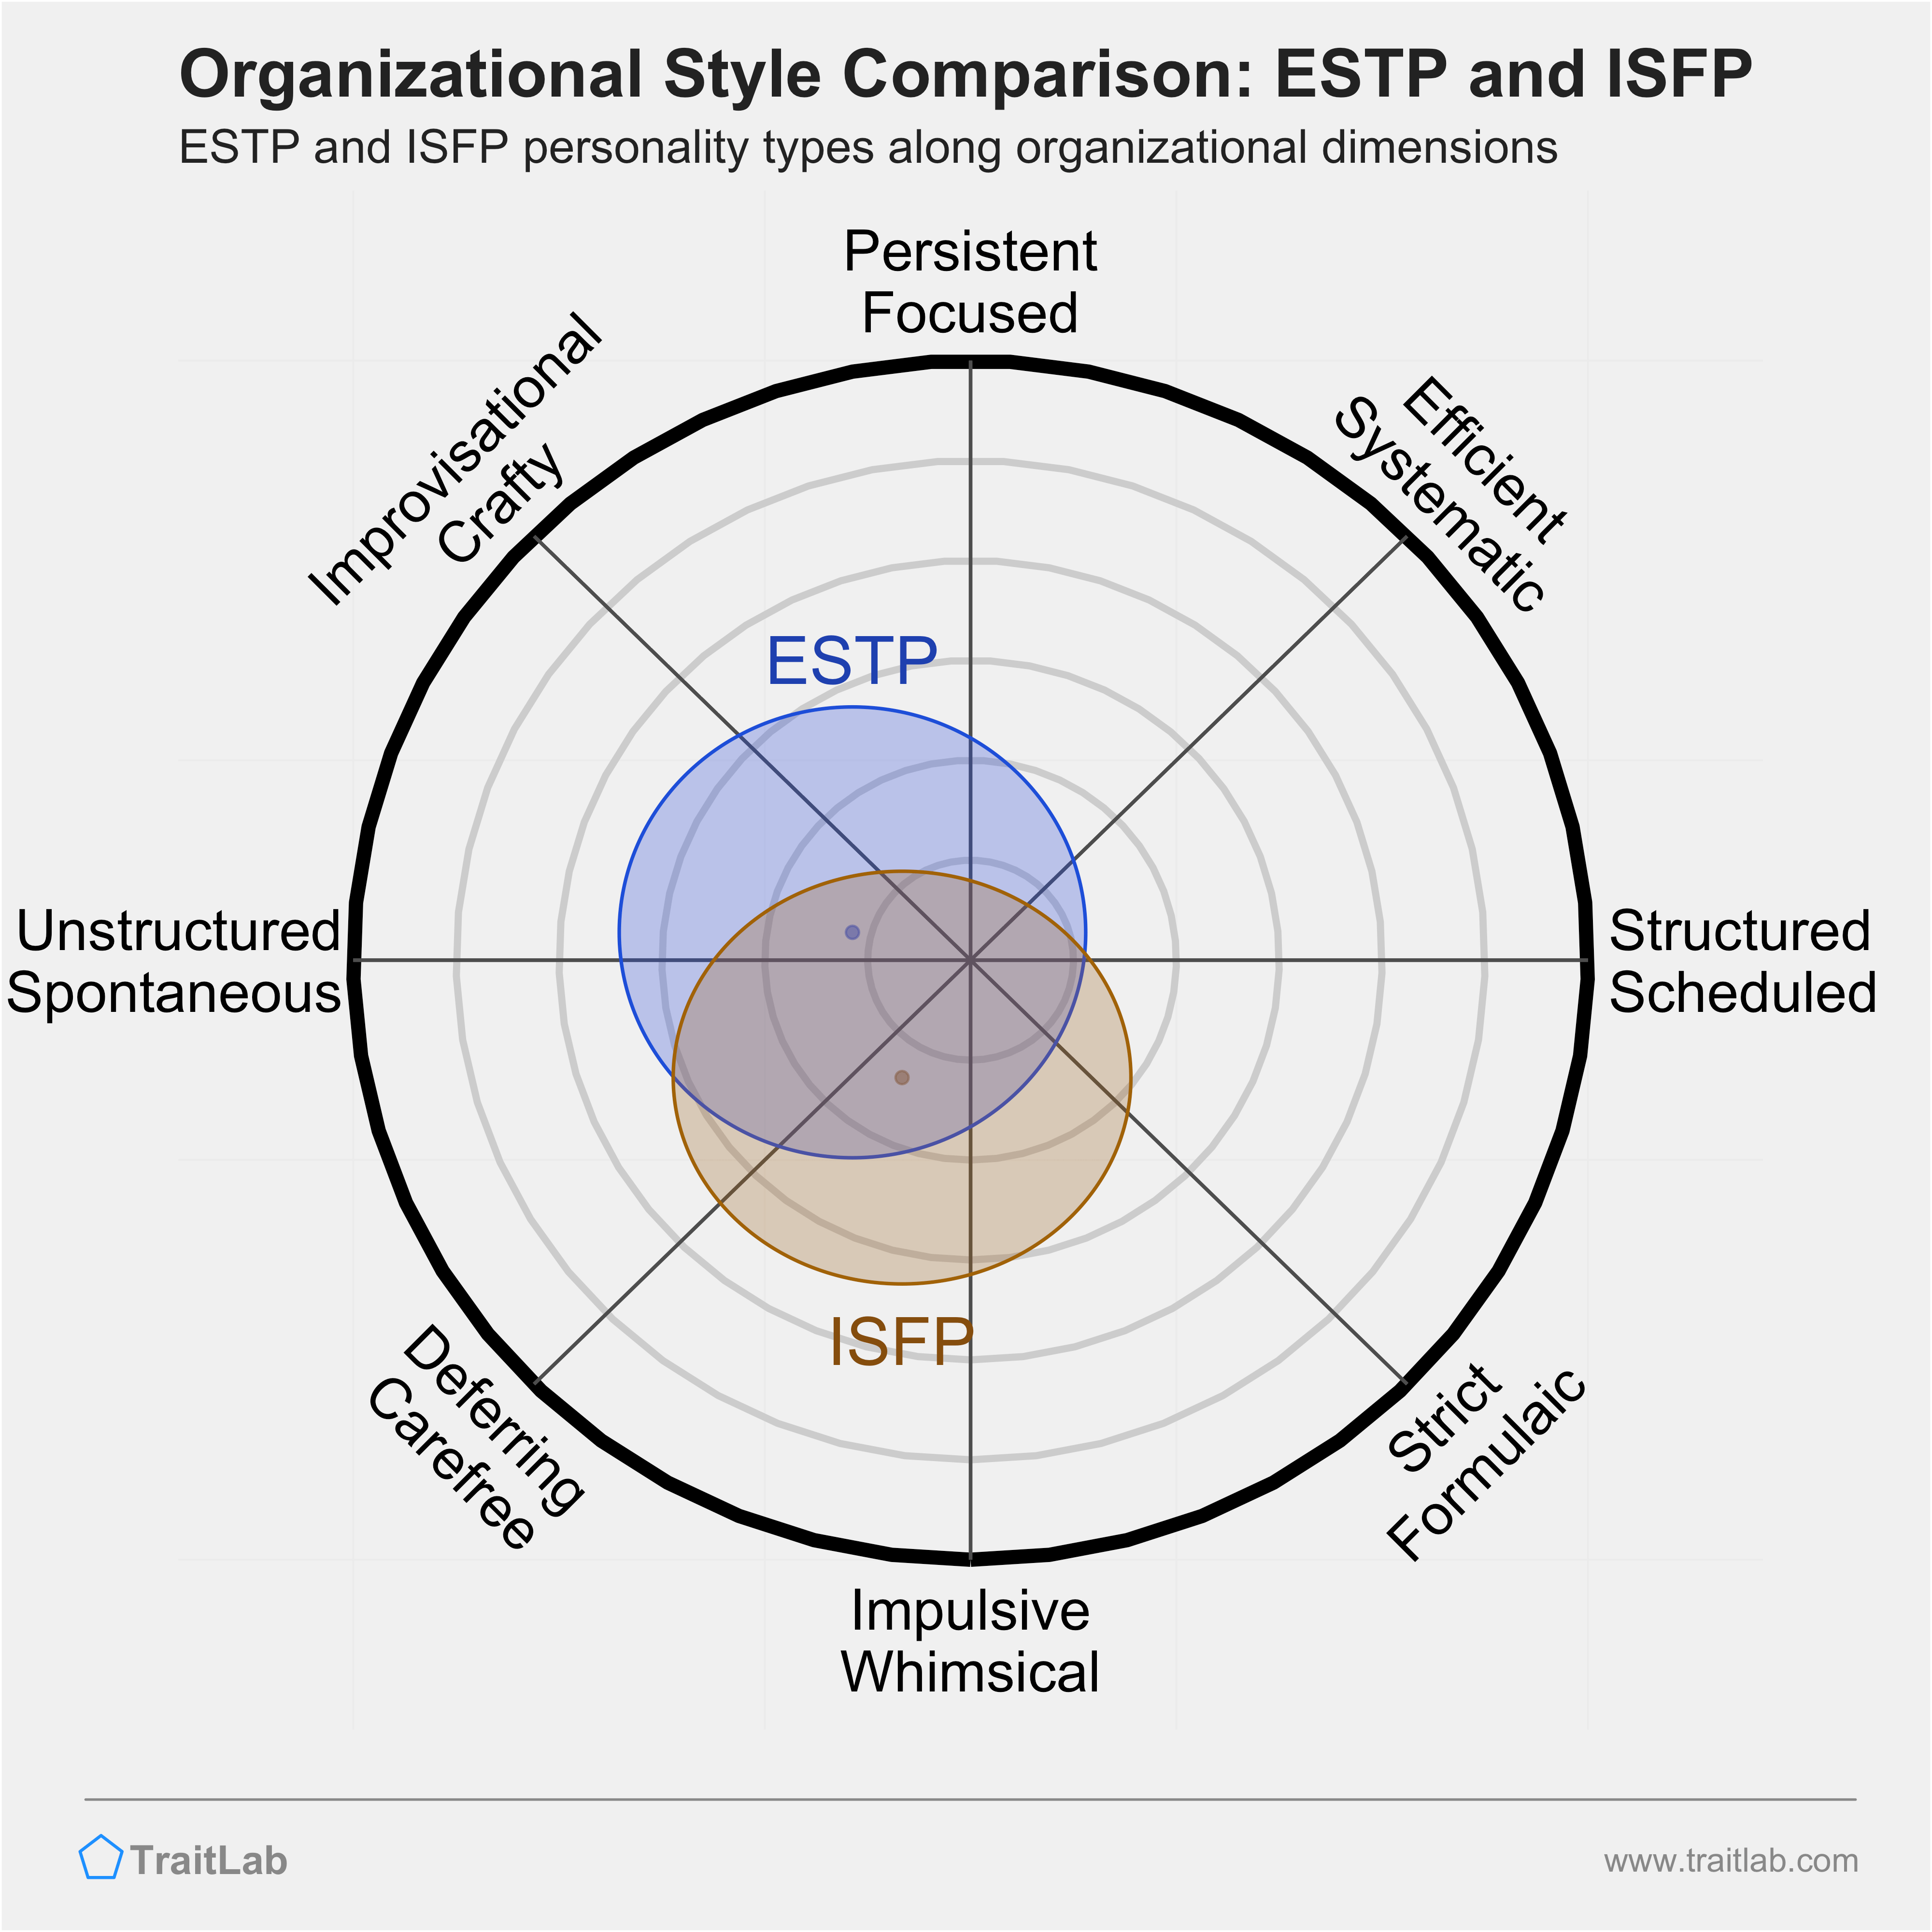 ESTP and ISFP comparison across organizational dimensions